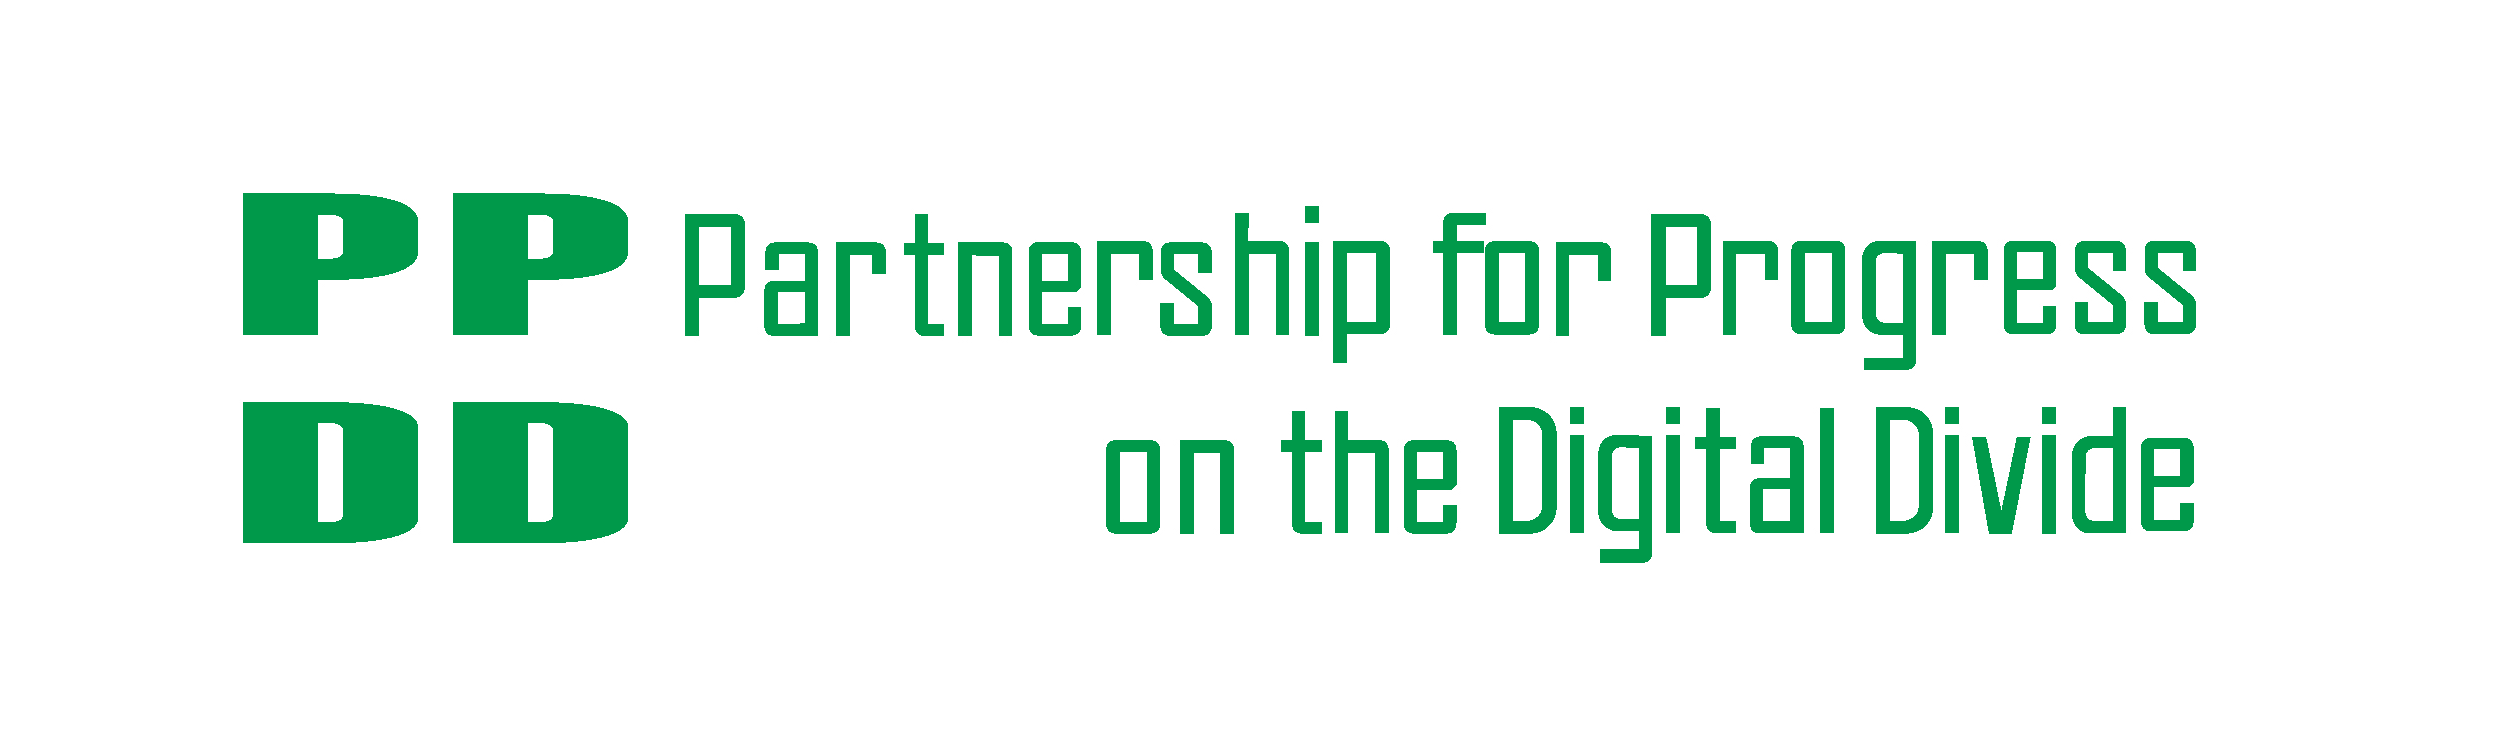 Partnership for Progress on the Digital Divide